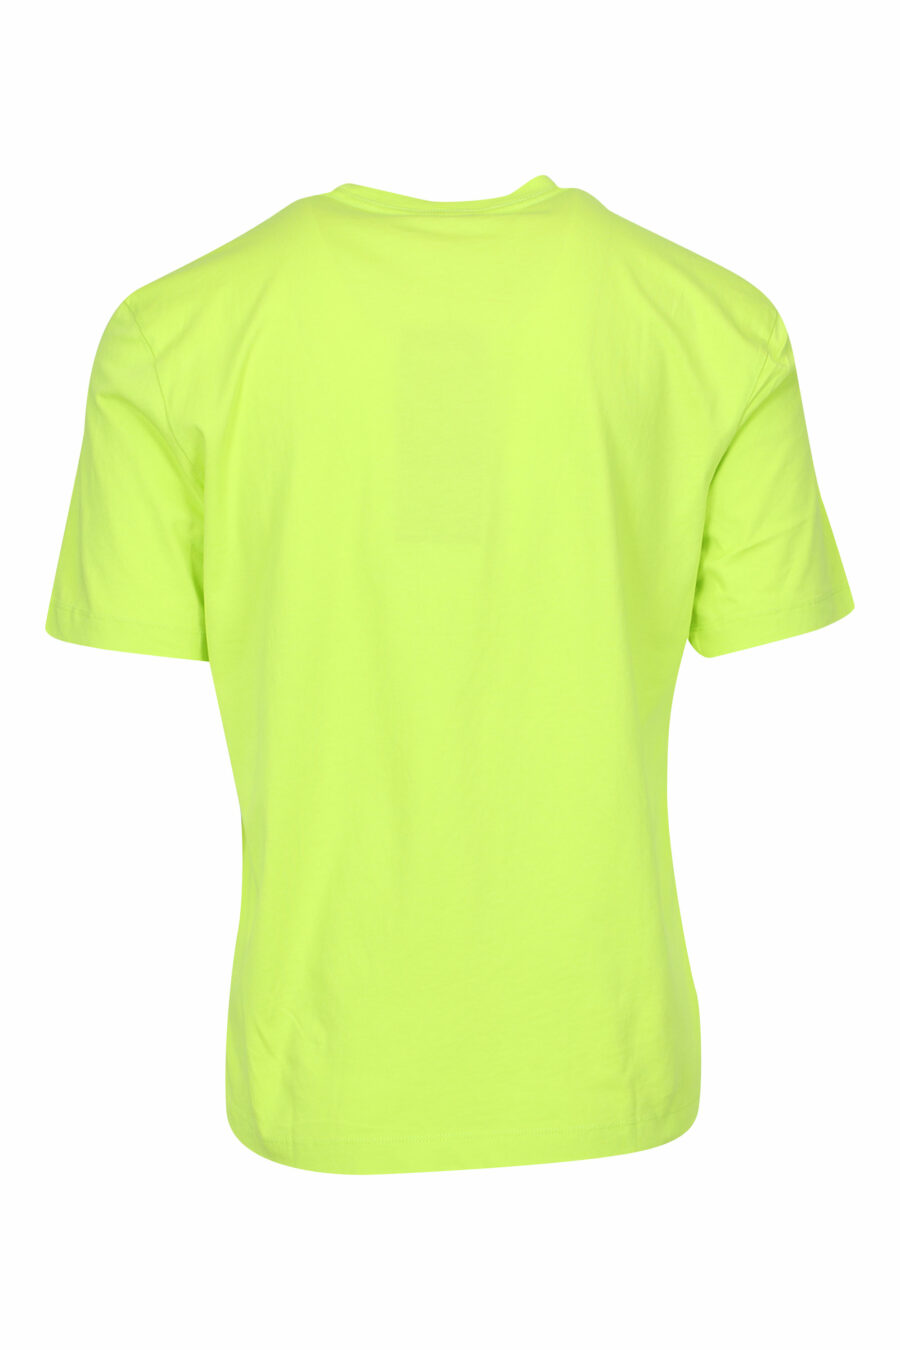 Yellow T-shirt with mini logo - 8058610829339 1